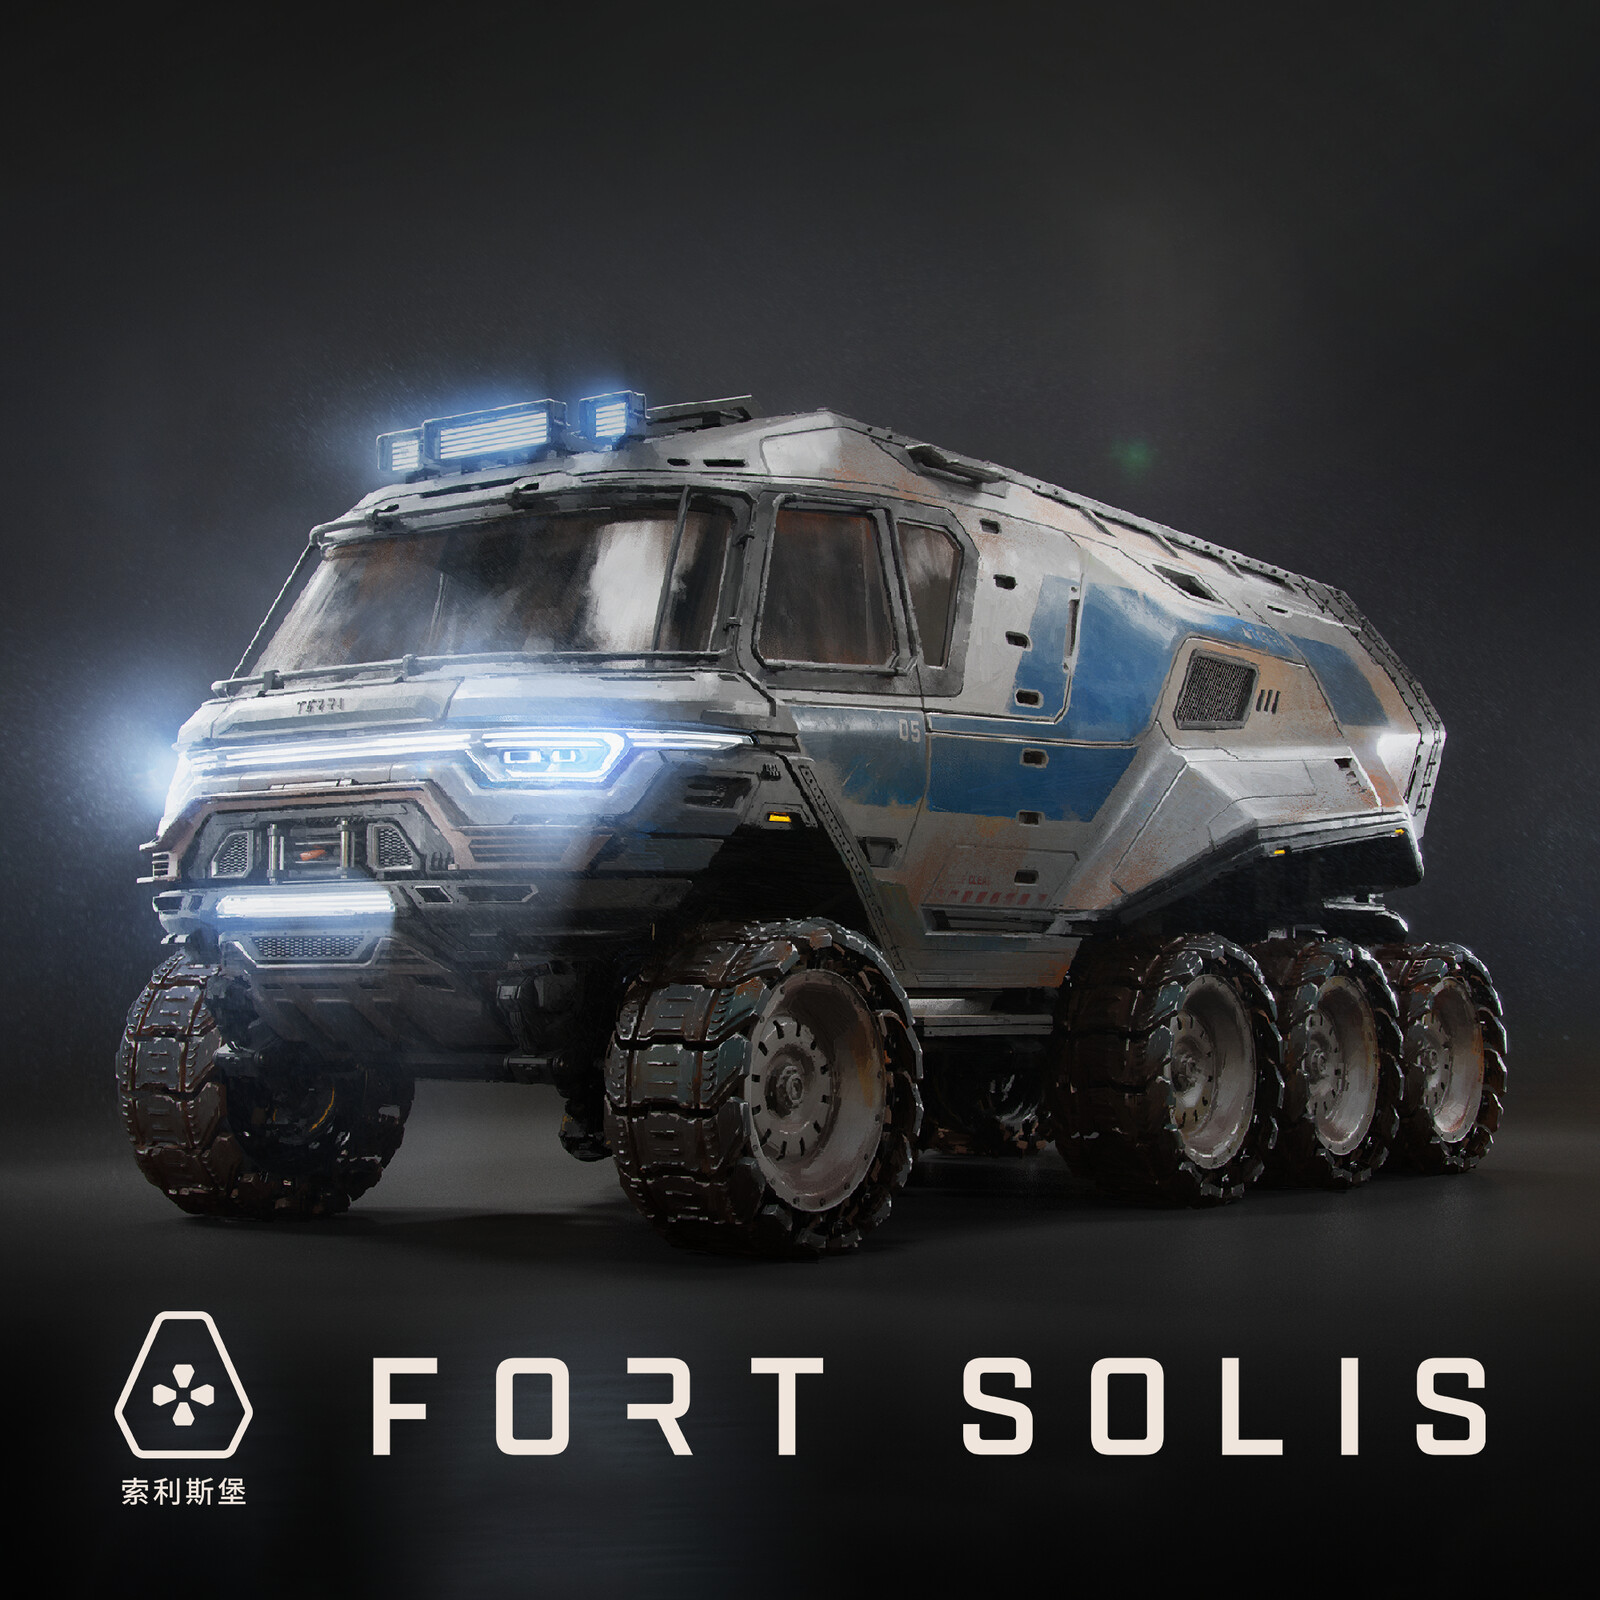 HTV - Heavy Transport Vehicle - Fort Solis